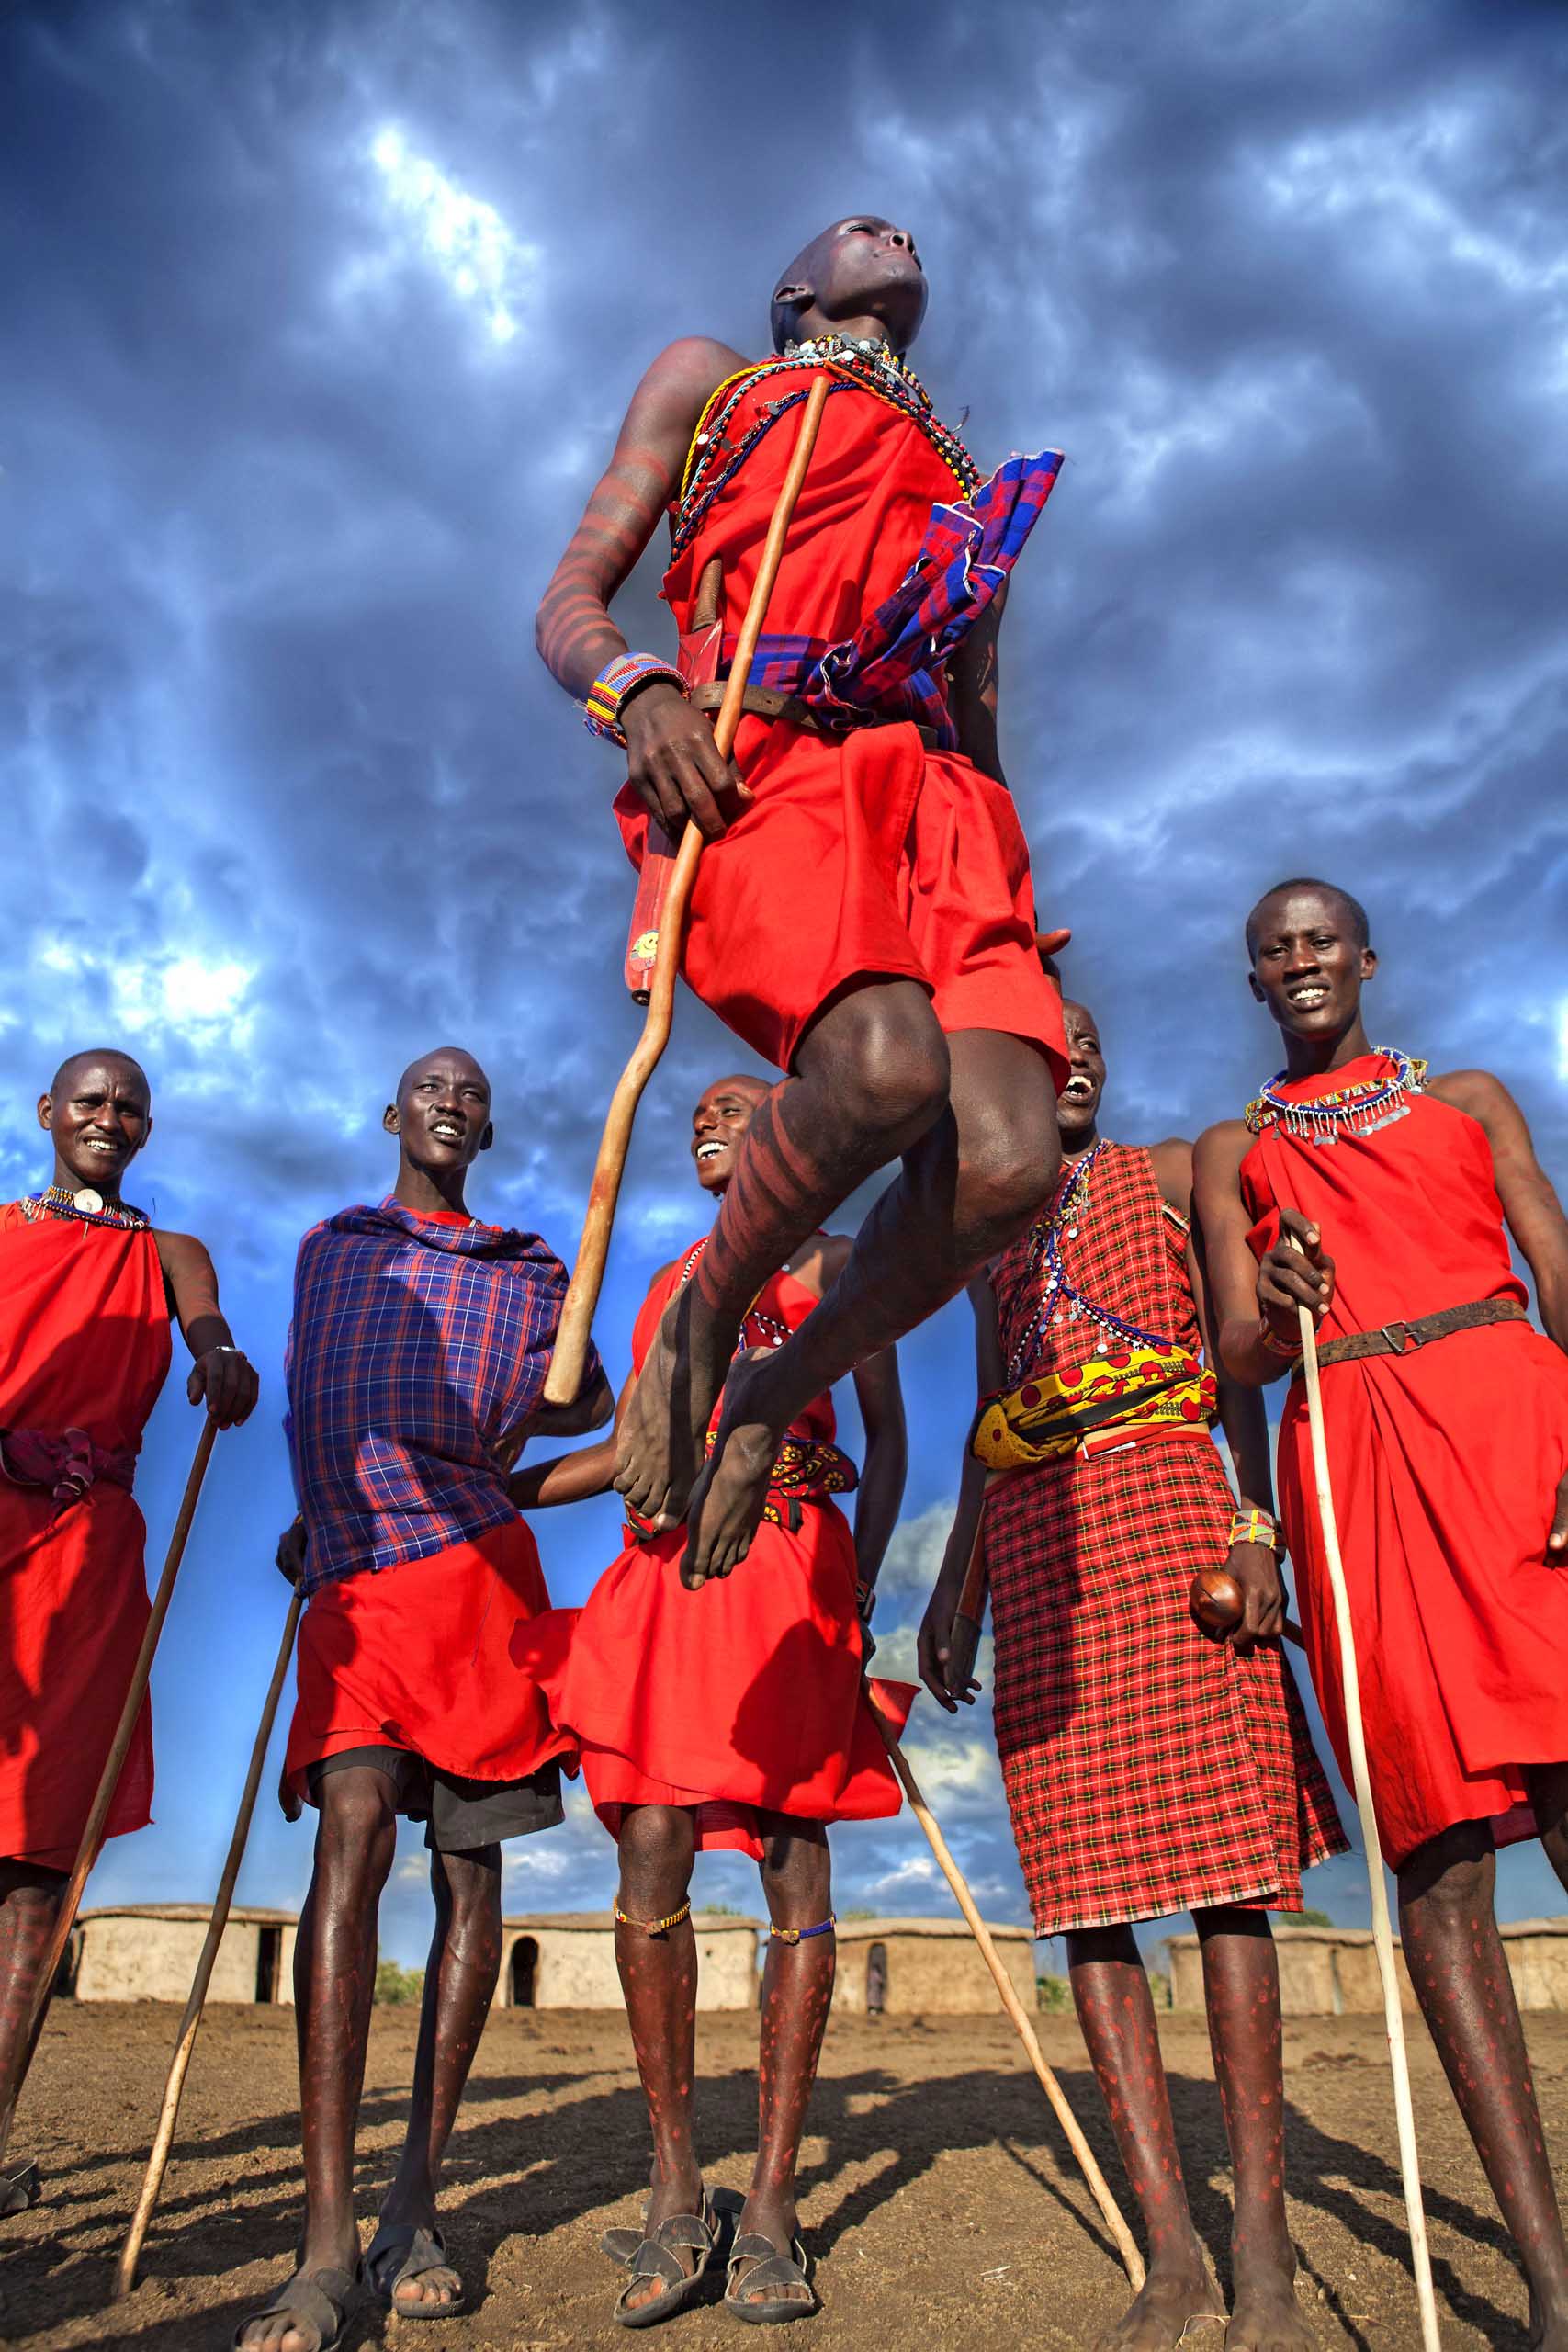 Masai warriors doing a traditional jump dance in Kenya.